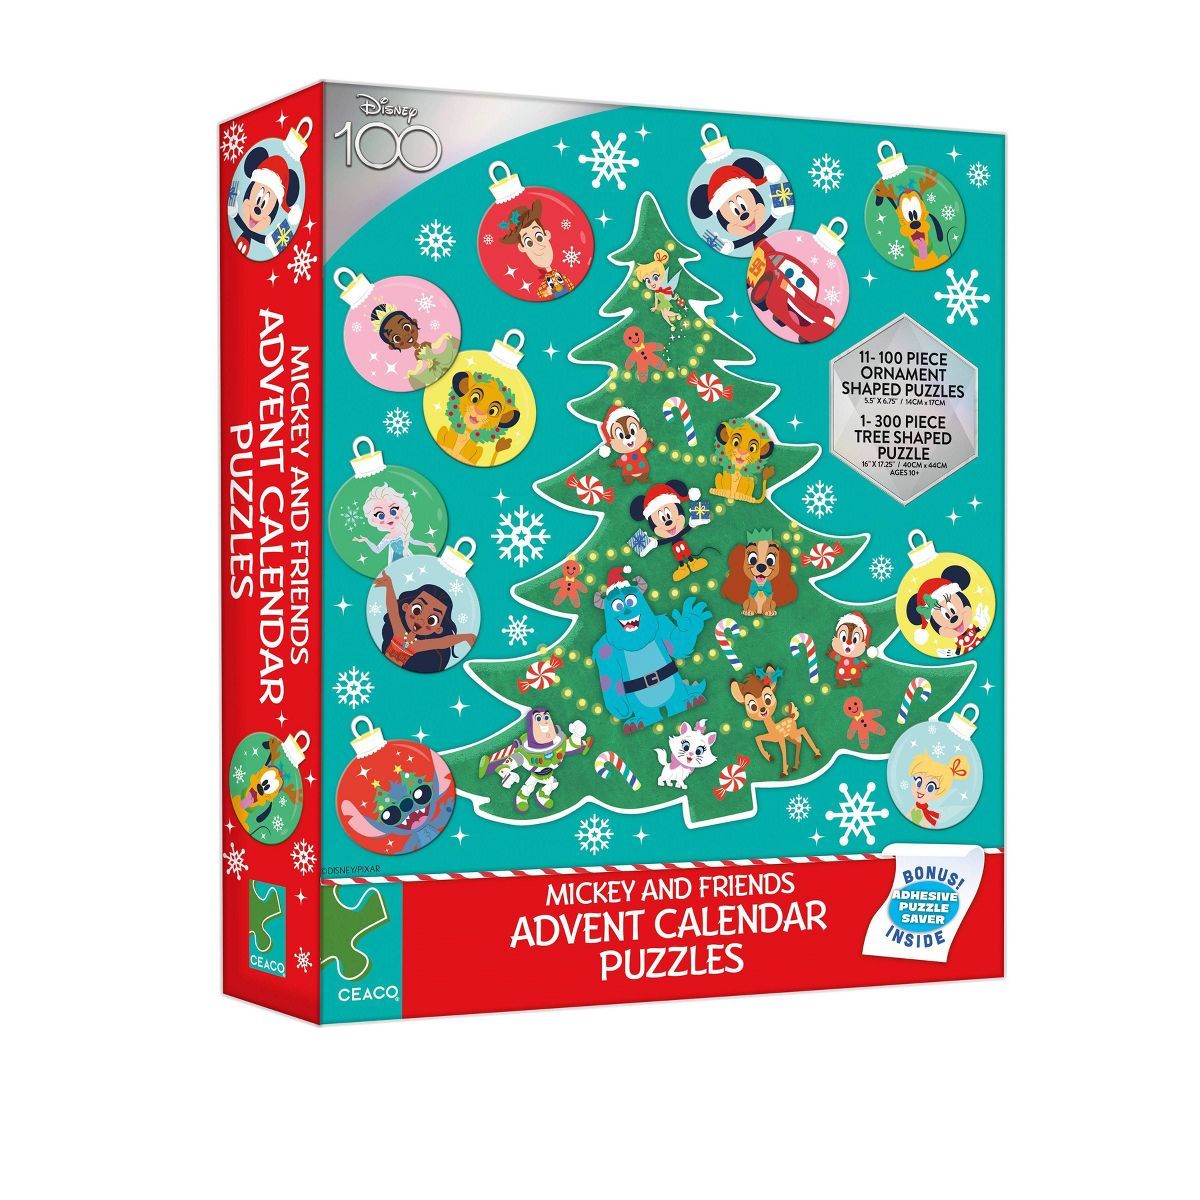 Ceaco Disney Advent Calendar | Target